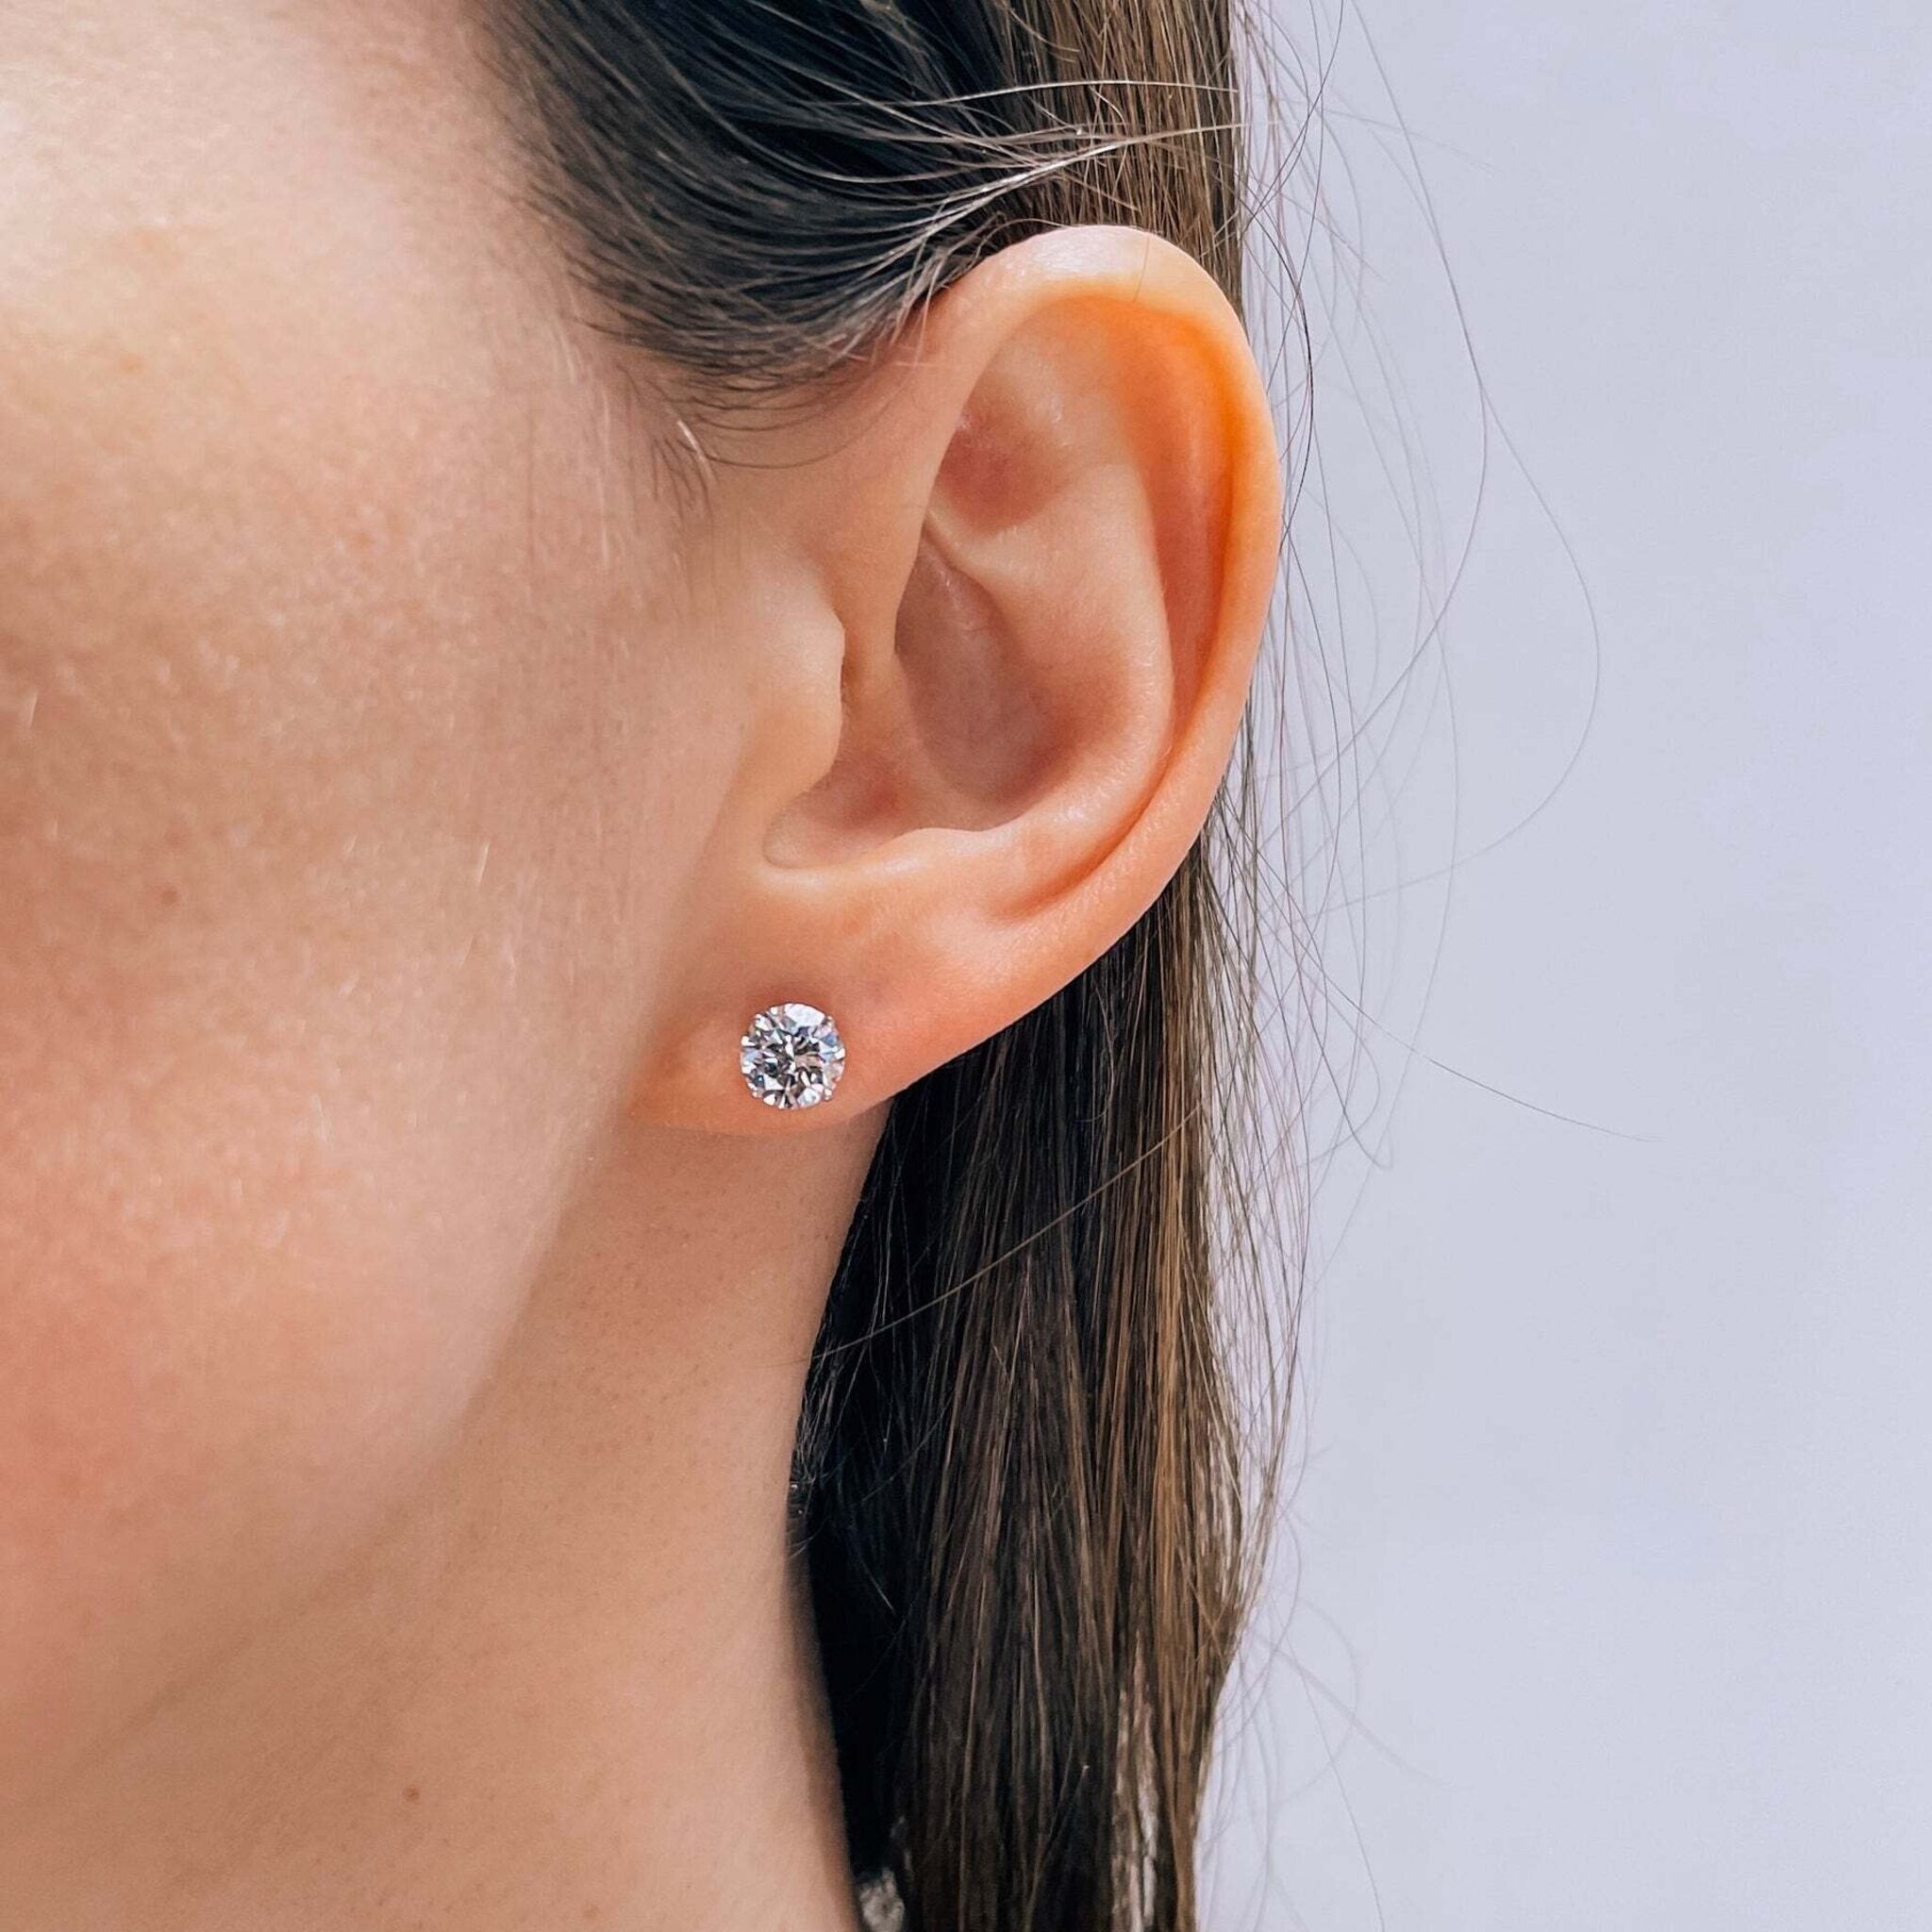 1 Carat Diamond Stud Earrings - Round Cut (GIA Certified)